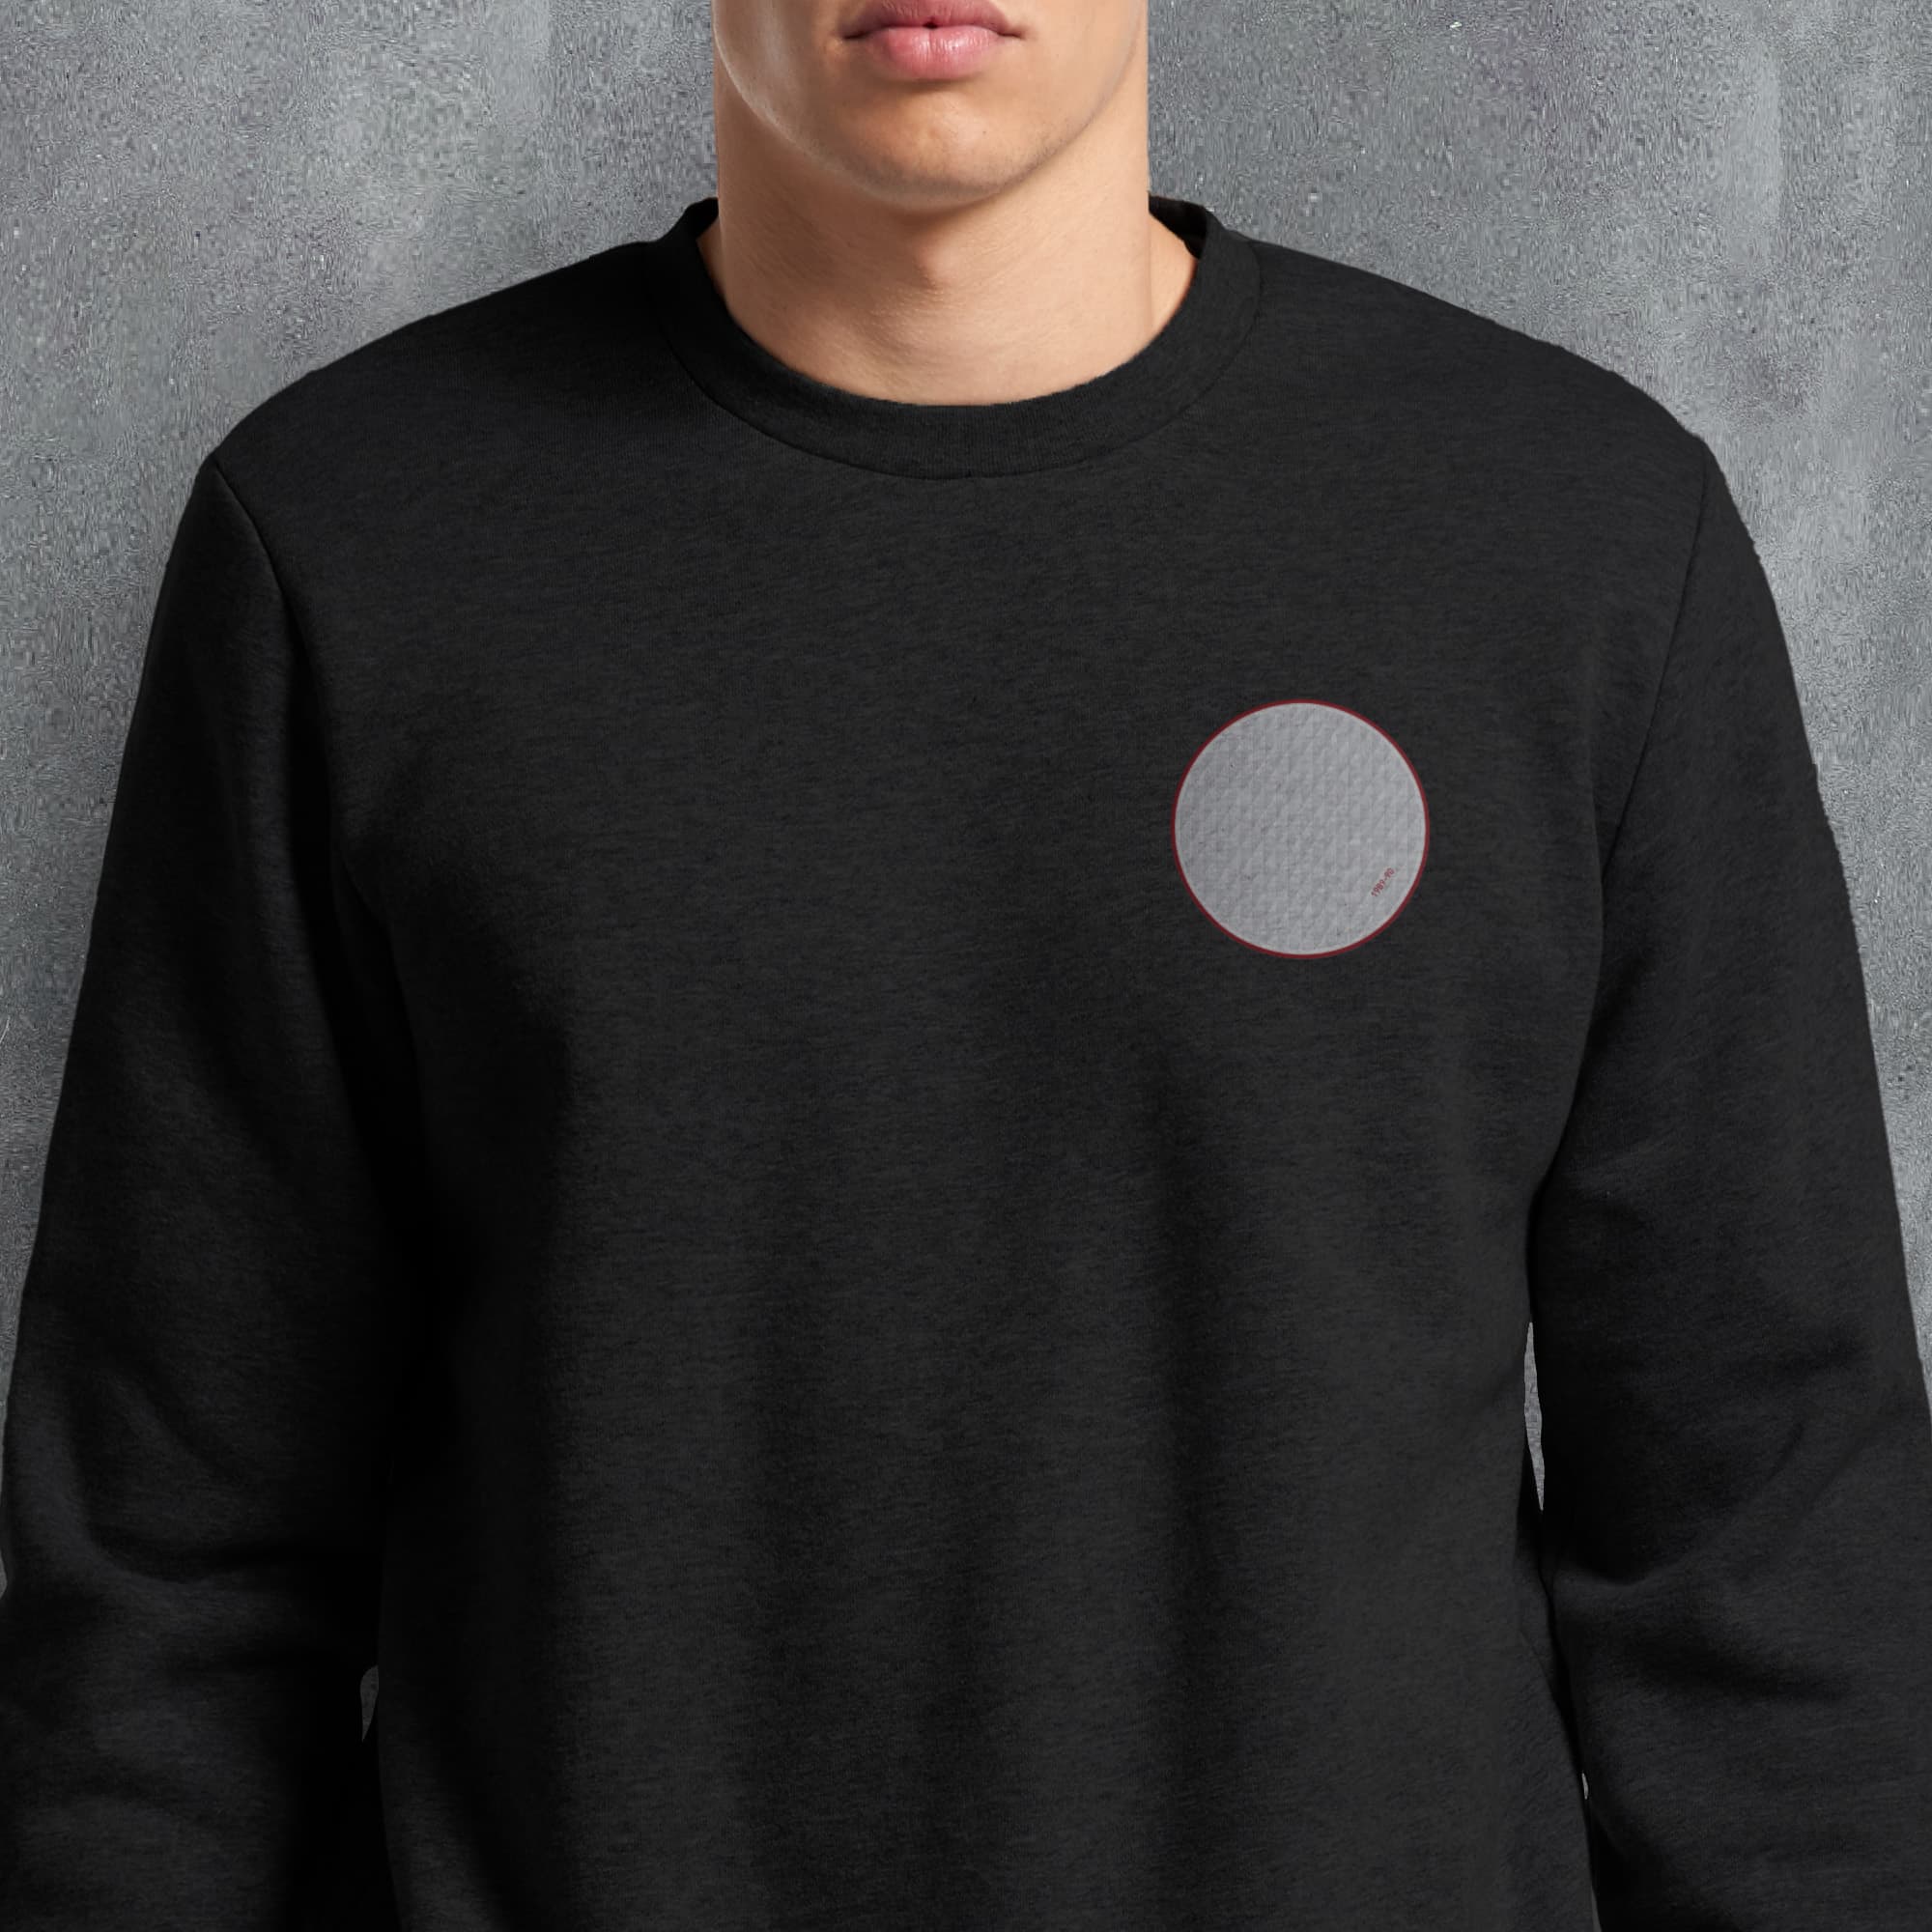 a man wearing a black sweatshirt with a grey circle on it